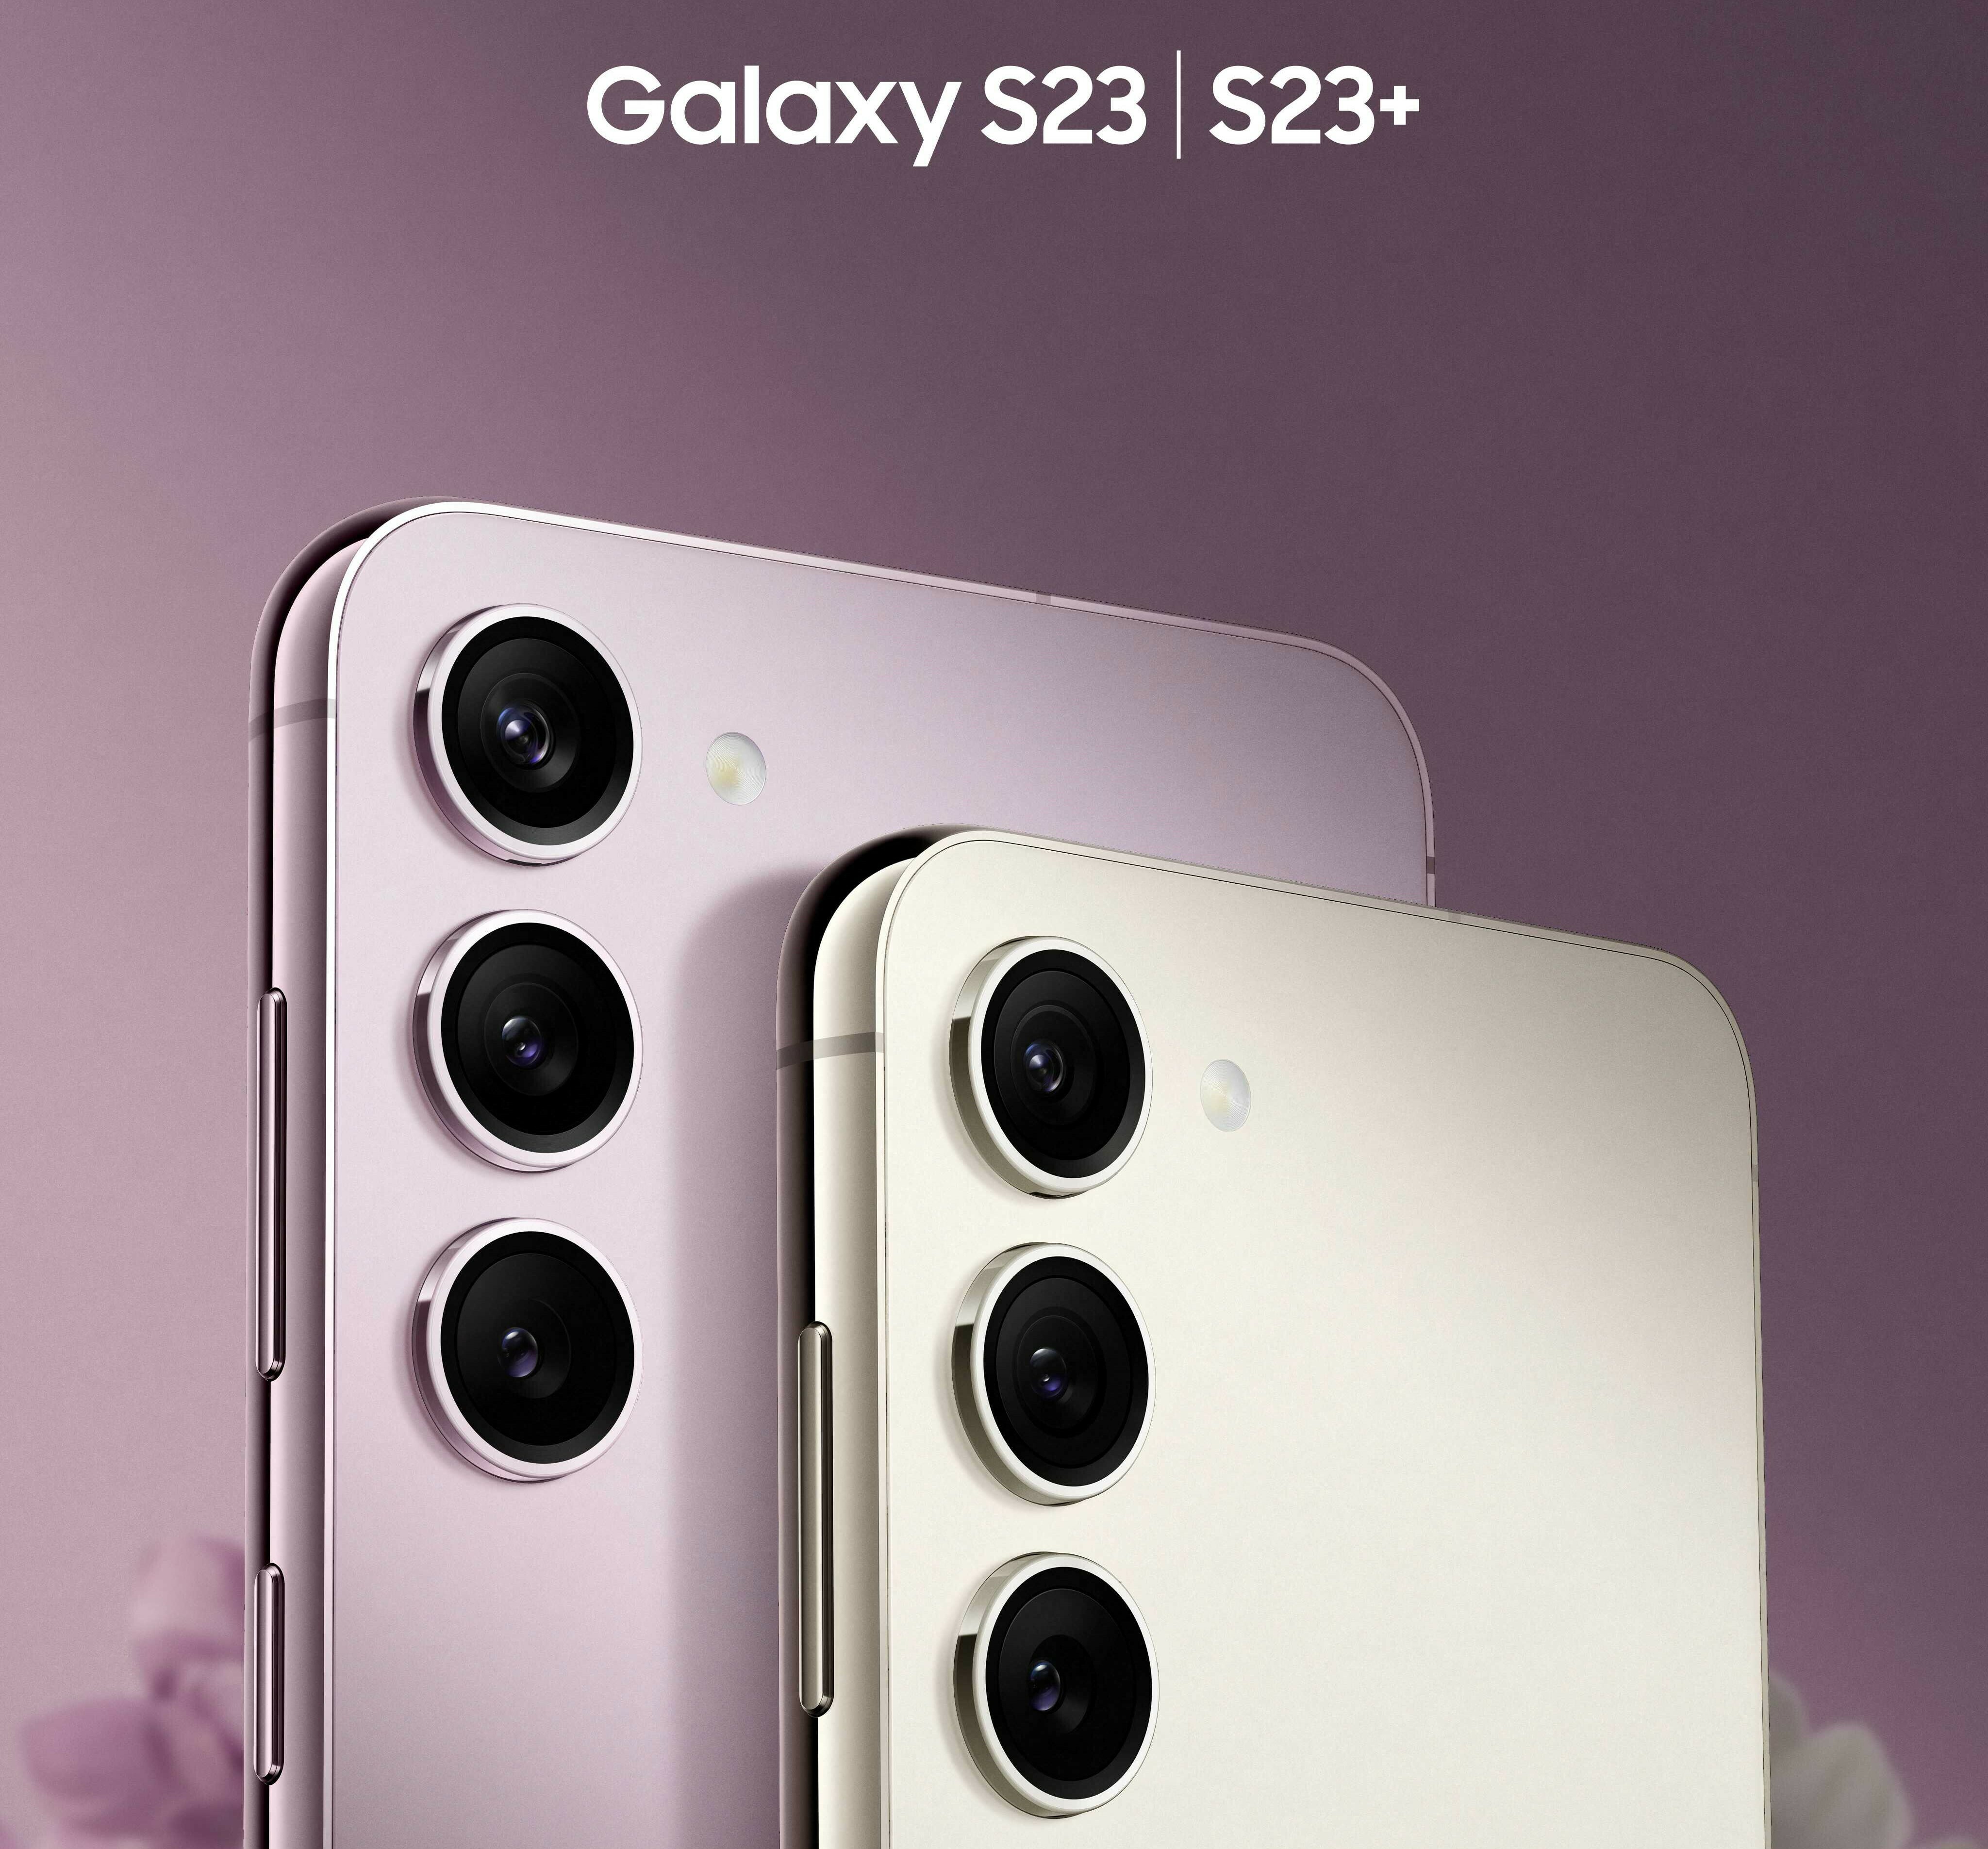 Samsung Galaxy S23 FE upgrades the camera to 50MP, uses last